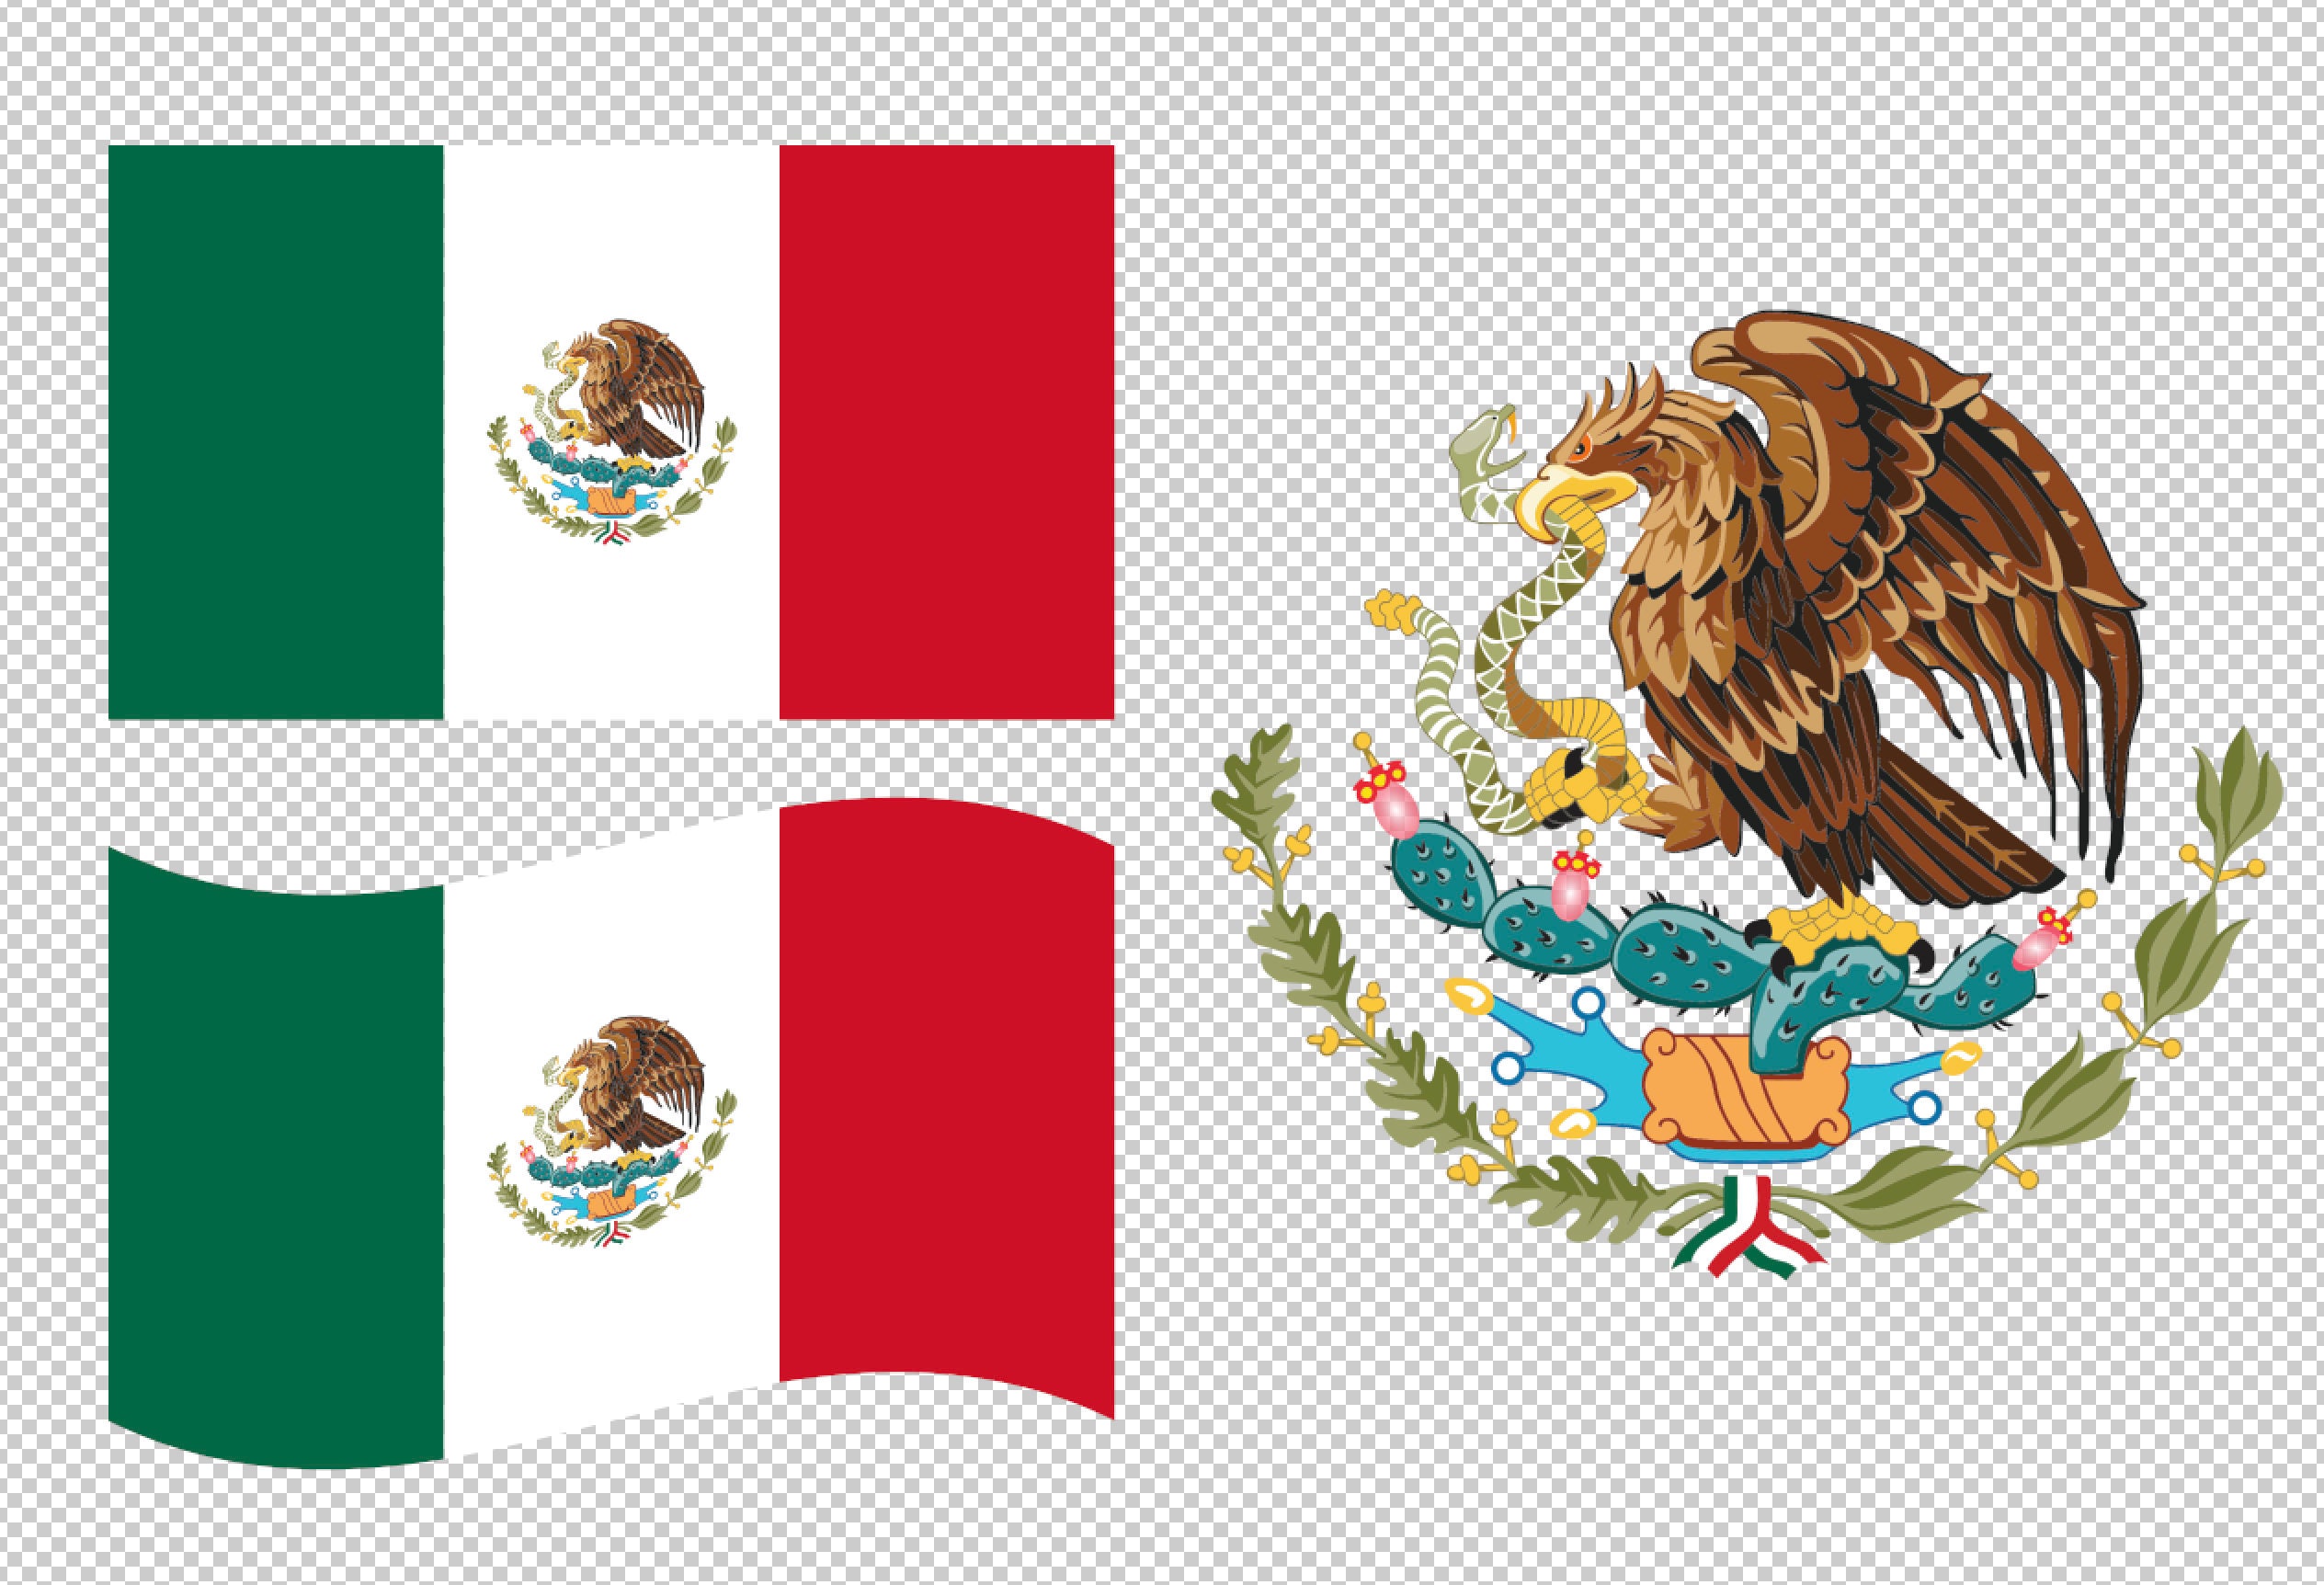 Mexico Flag SVG Vector Clip Art - Cut Files for Cricut, Silhouette